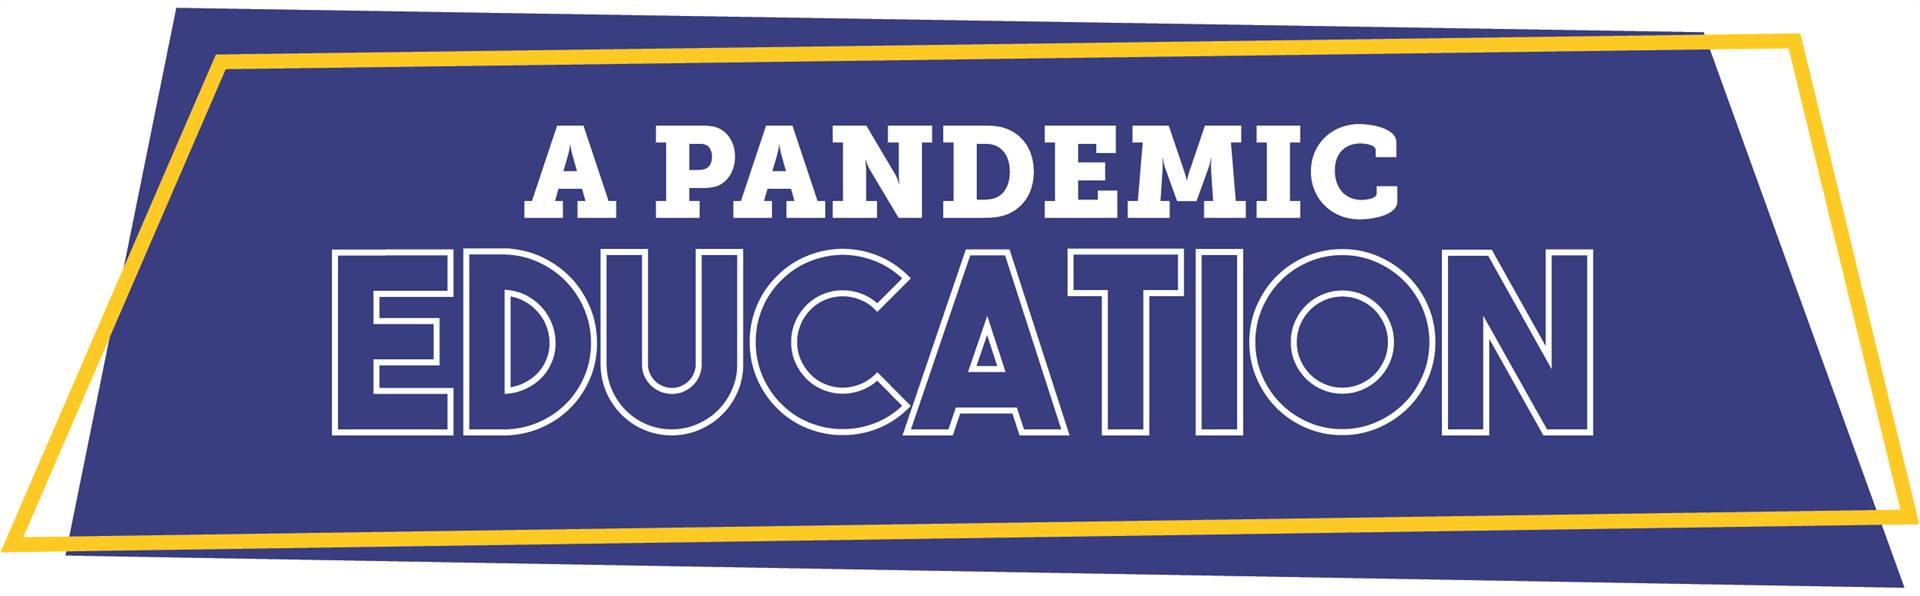 A Pandemic Education